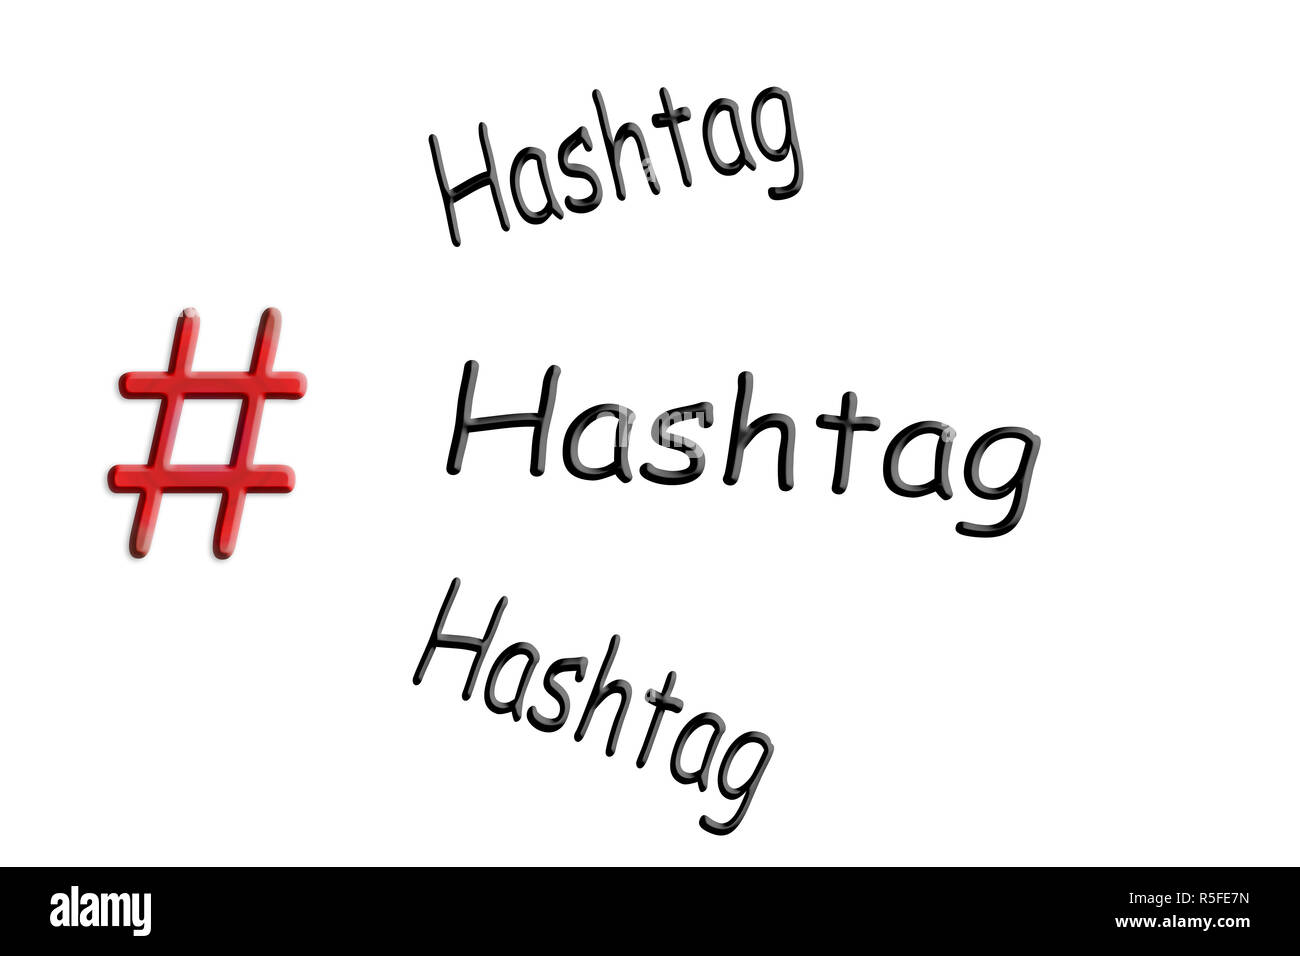 Internet und Social Media Thema #hashtag Stockfoto